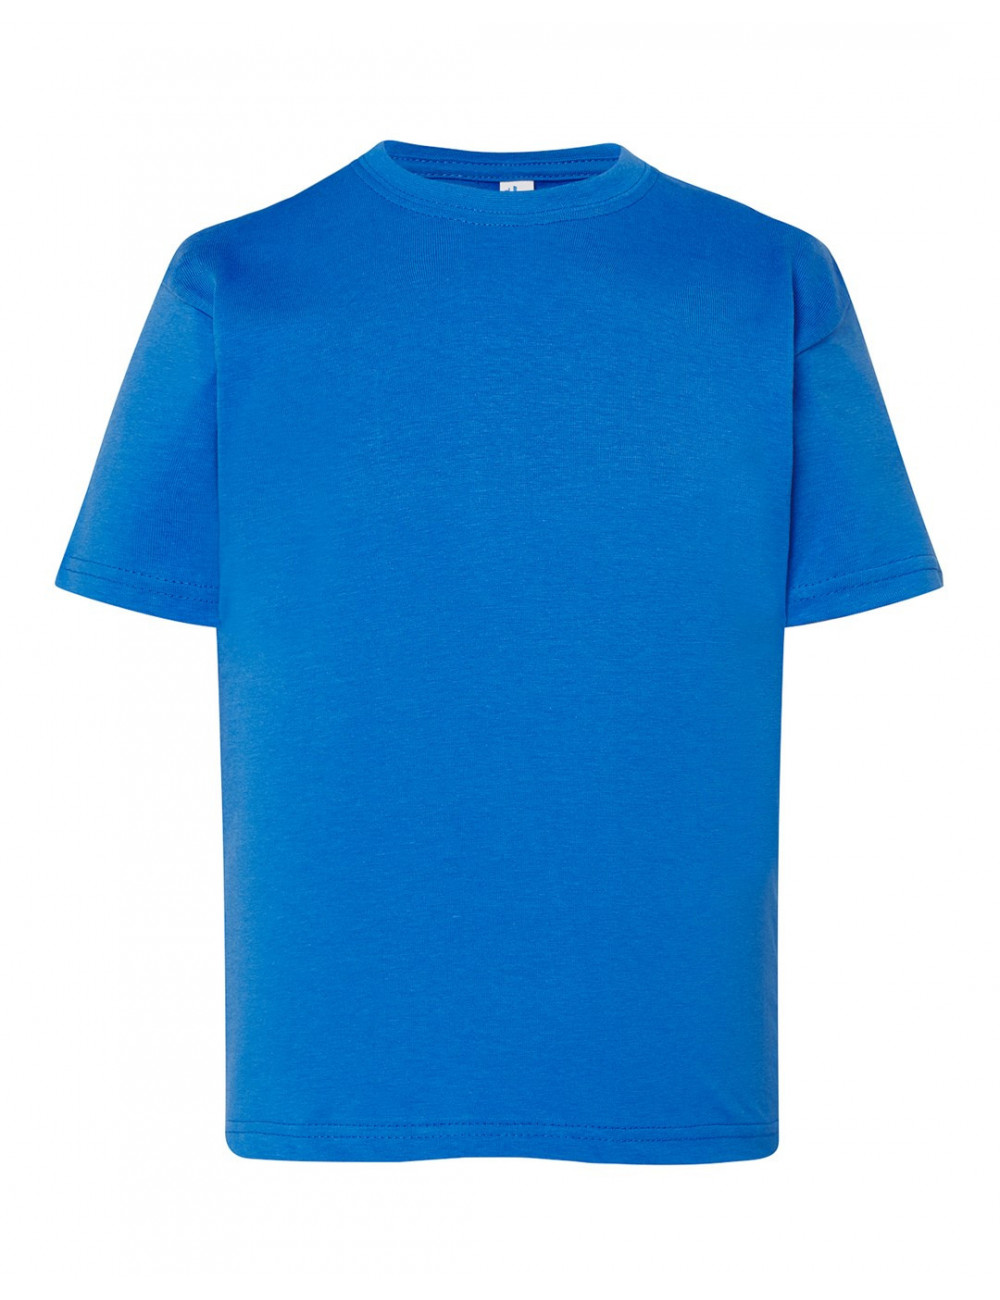 Koszulka dziecięca tsrk 150 regular kid royal niebieski Jhk